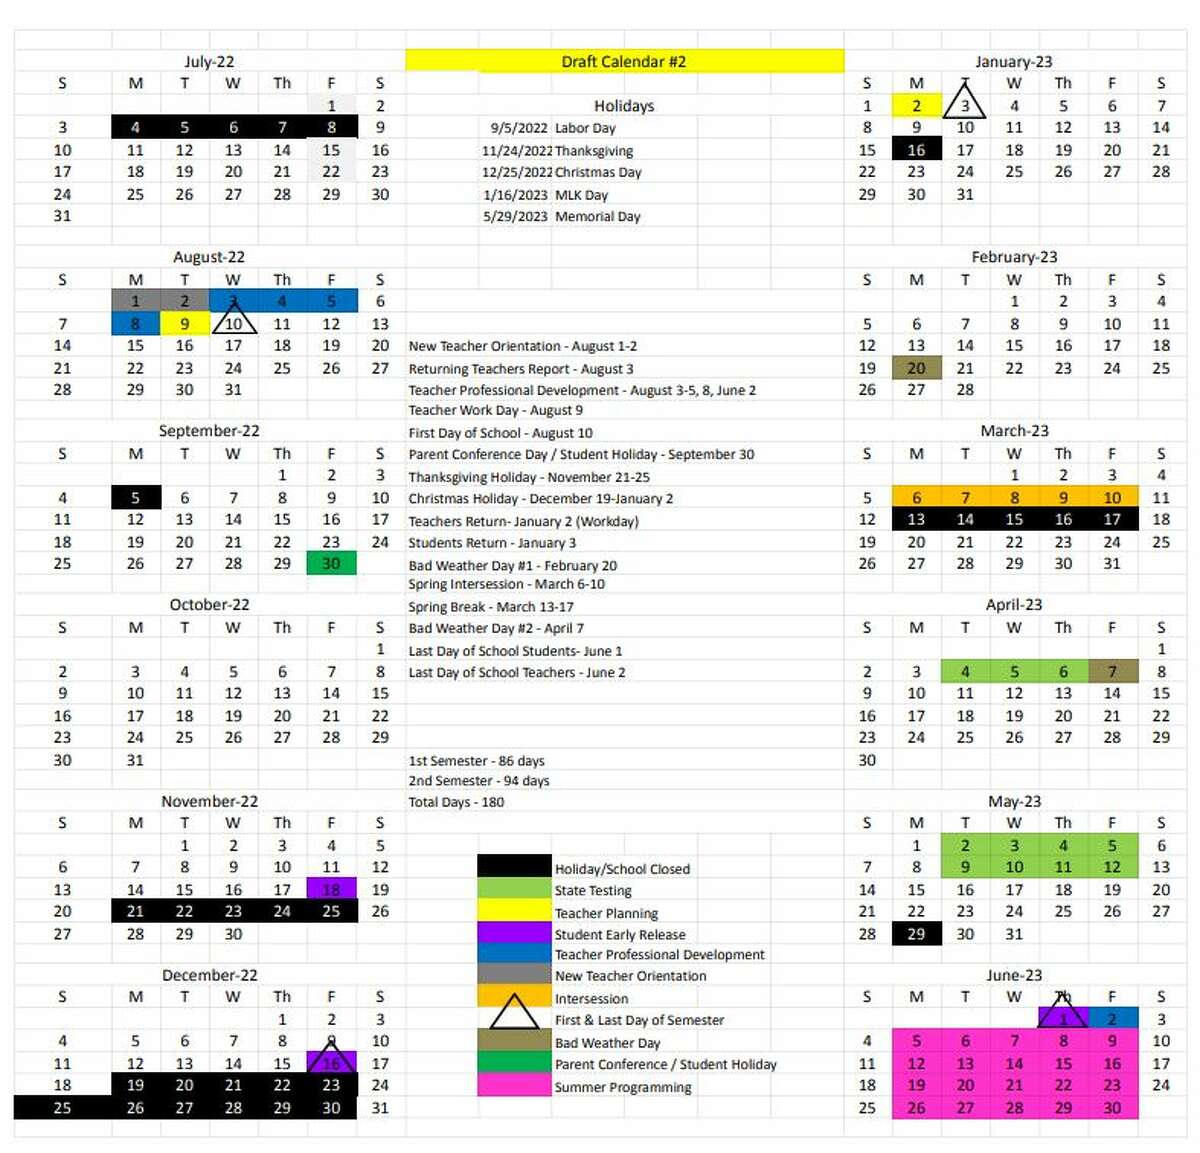 misd-presents-options-for-school-calendar